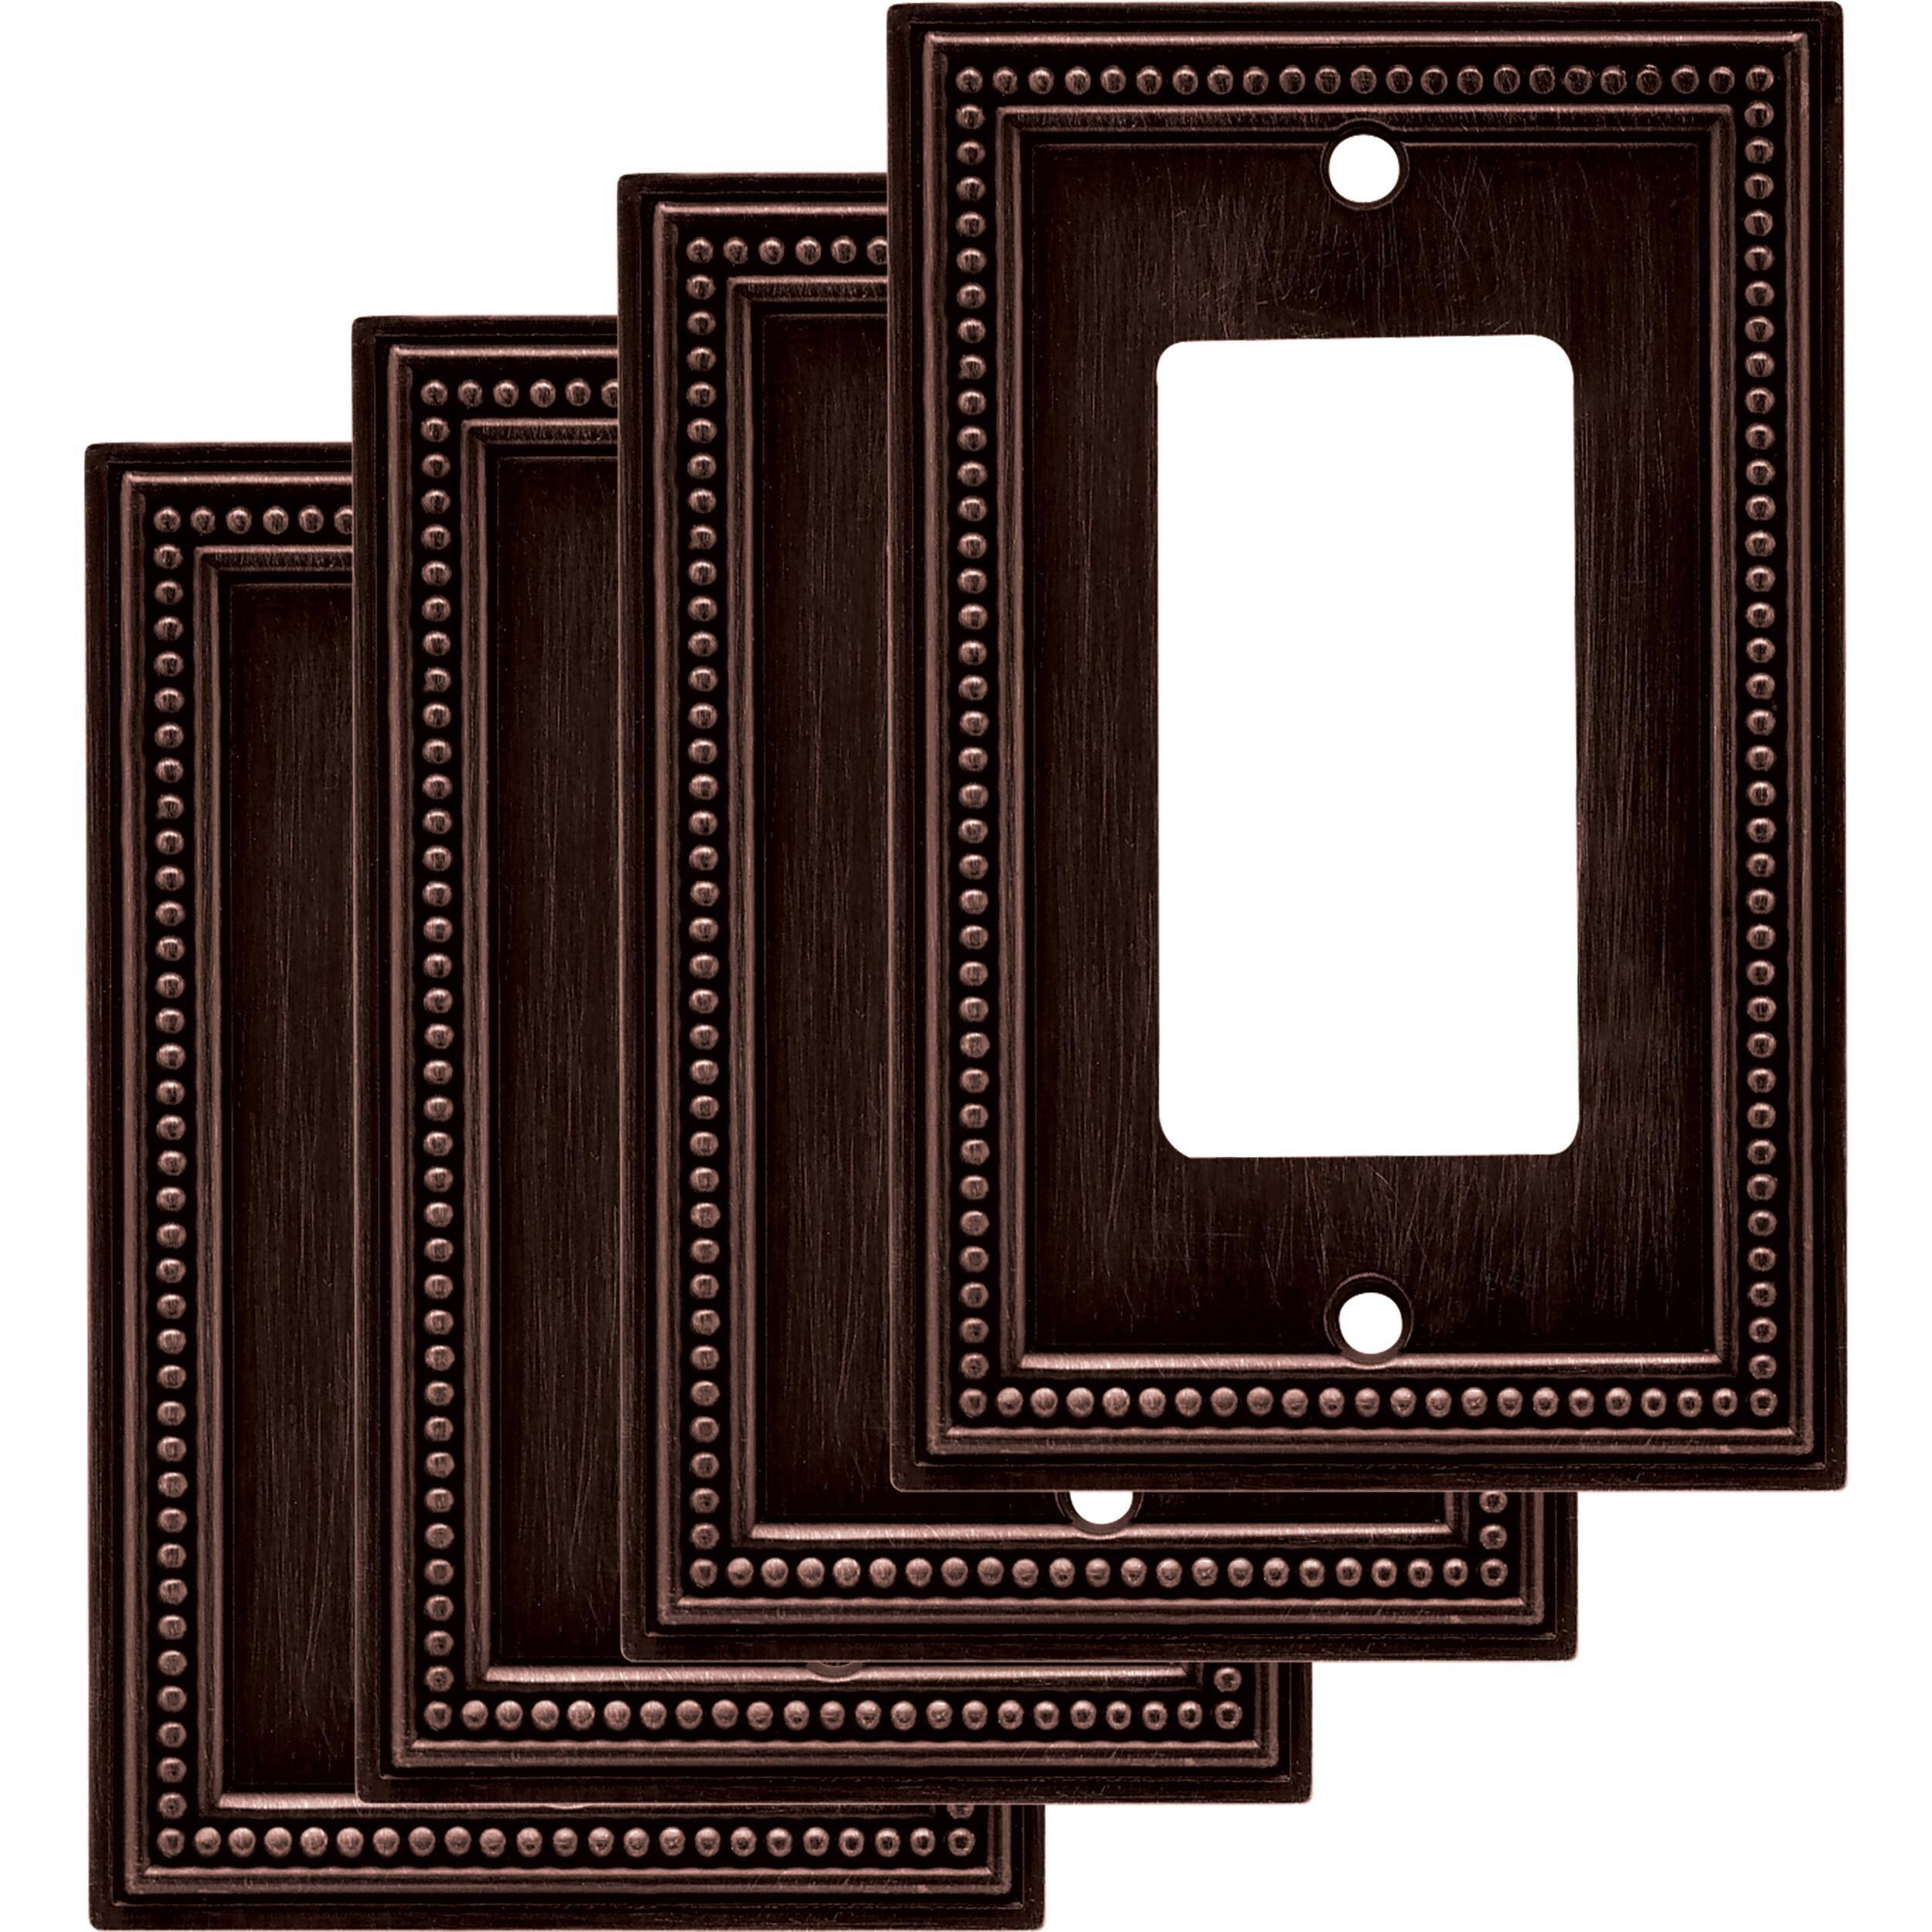 10 Decorative Switch Plates We Love: Bronze, Black, Vintage